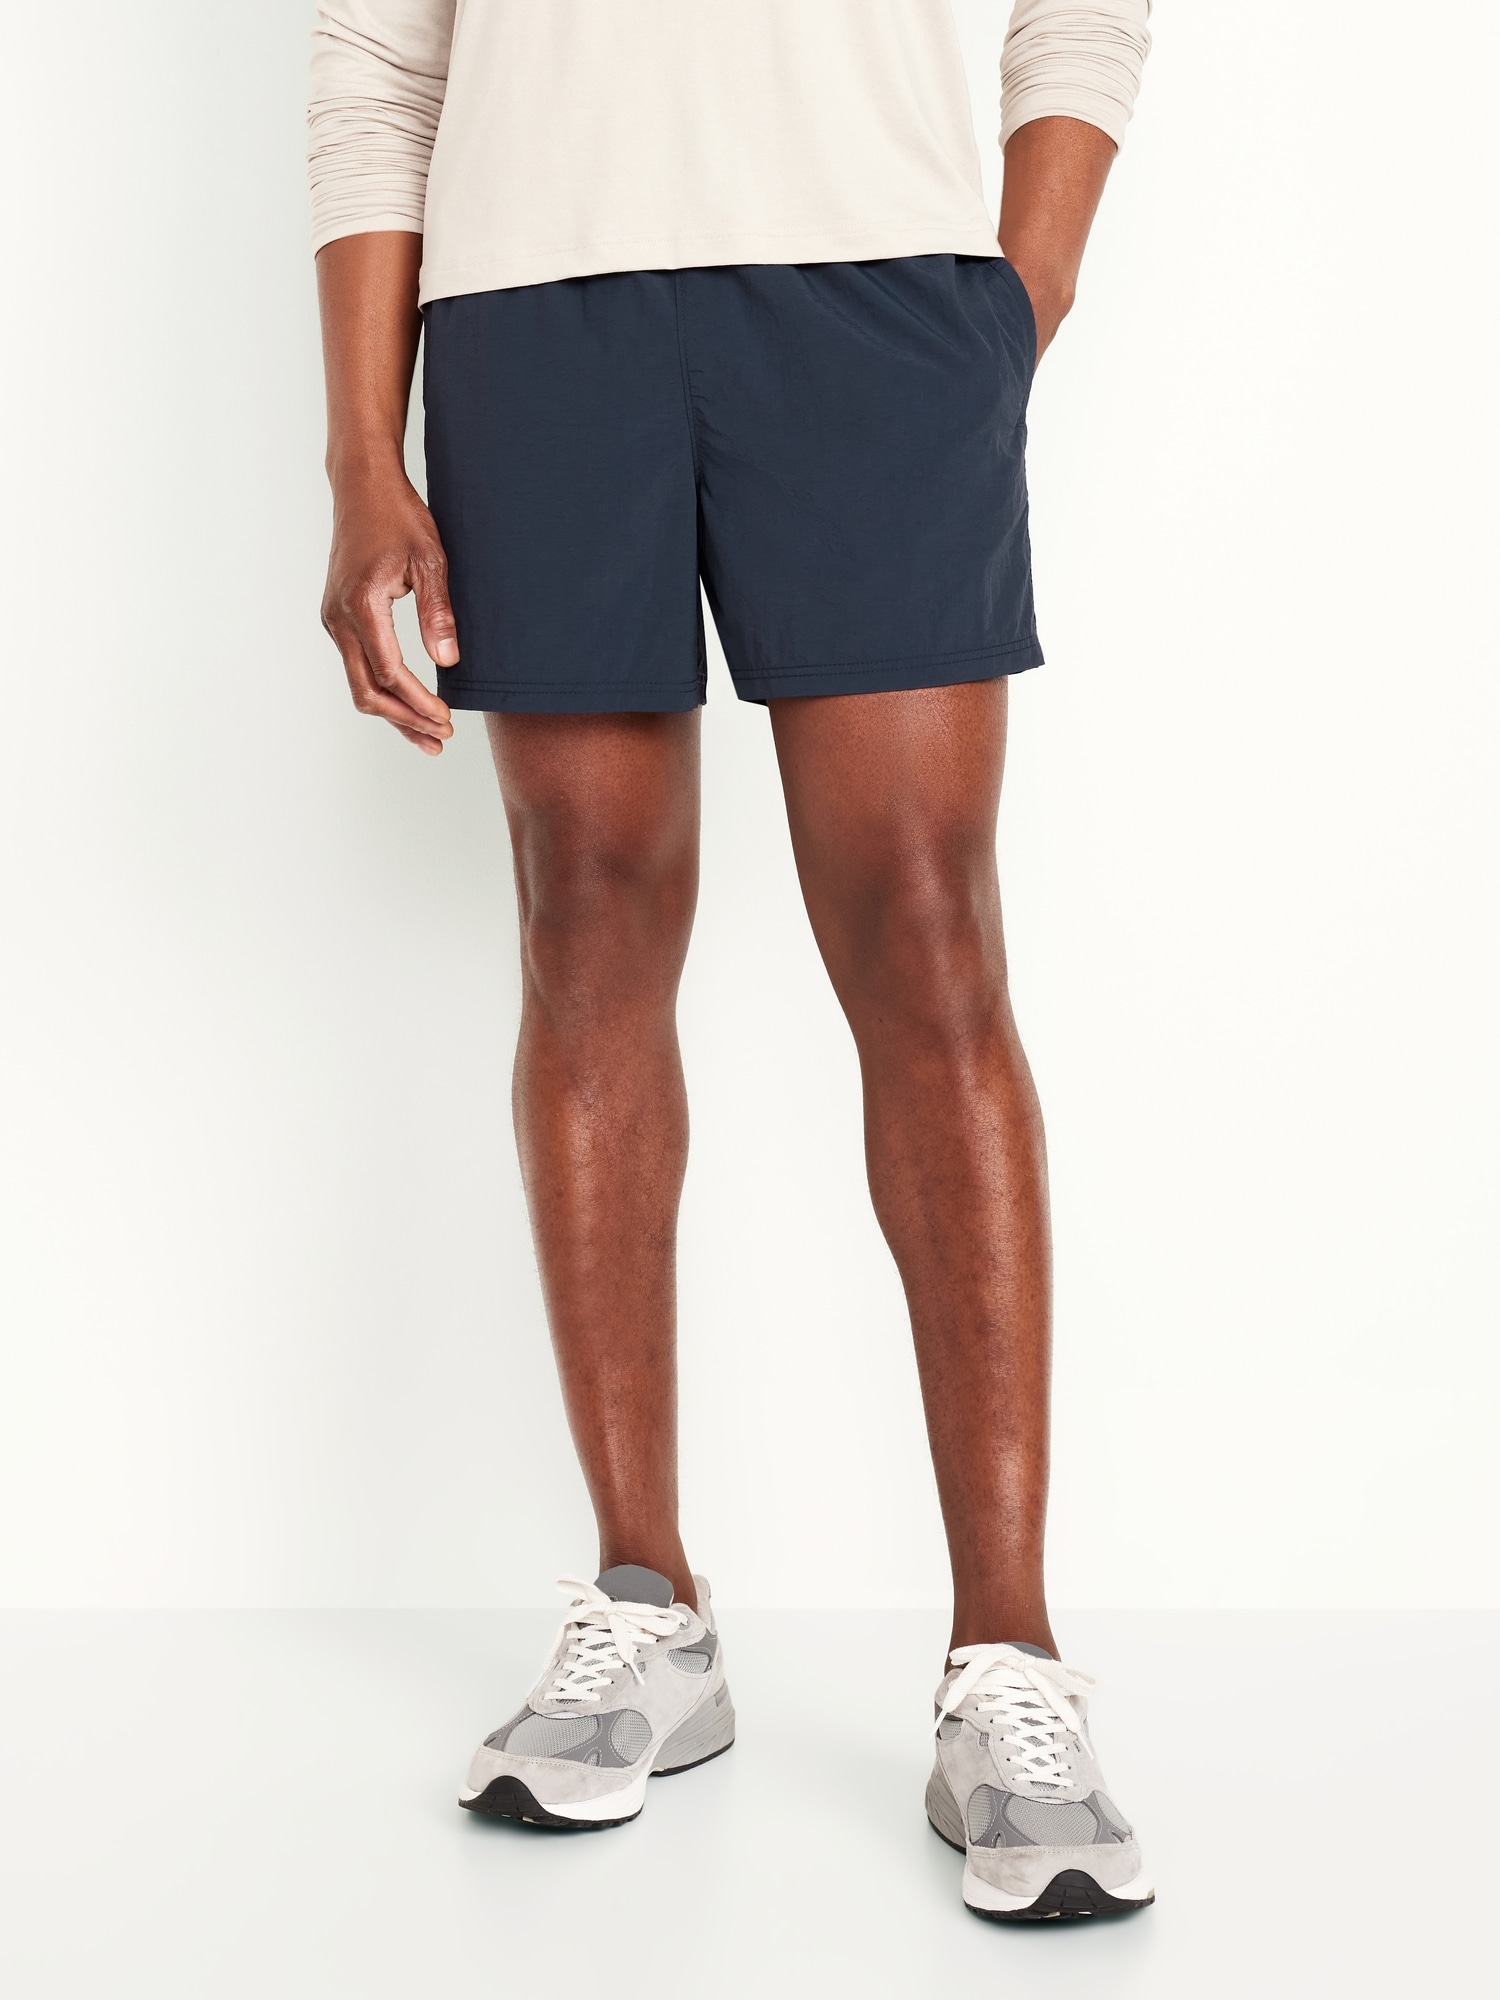 Explore Shorts -- 5-inch inseam